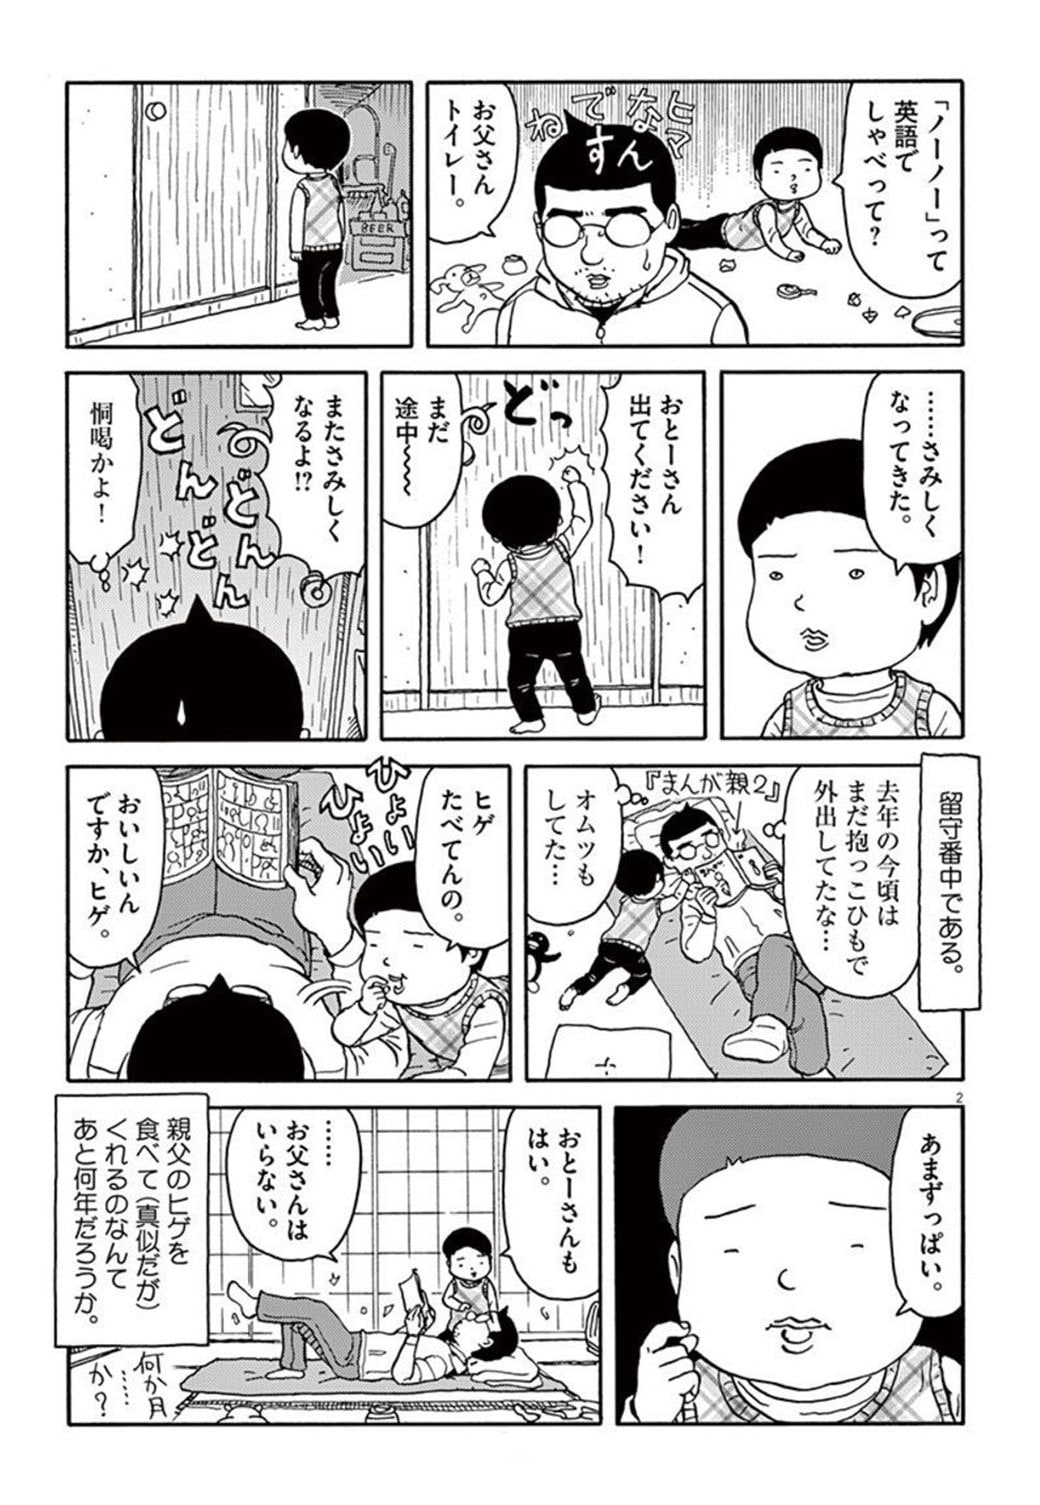 吉田 戦車 漫画 壁紙画像マンガ